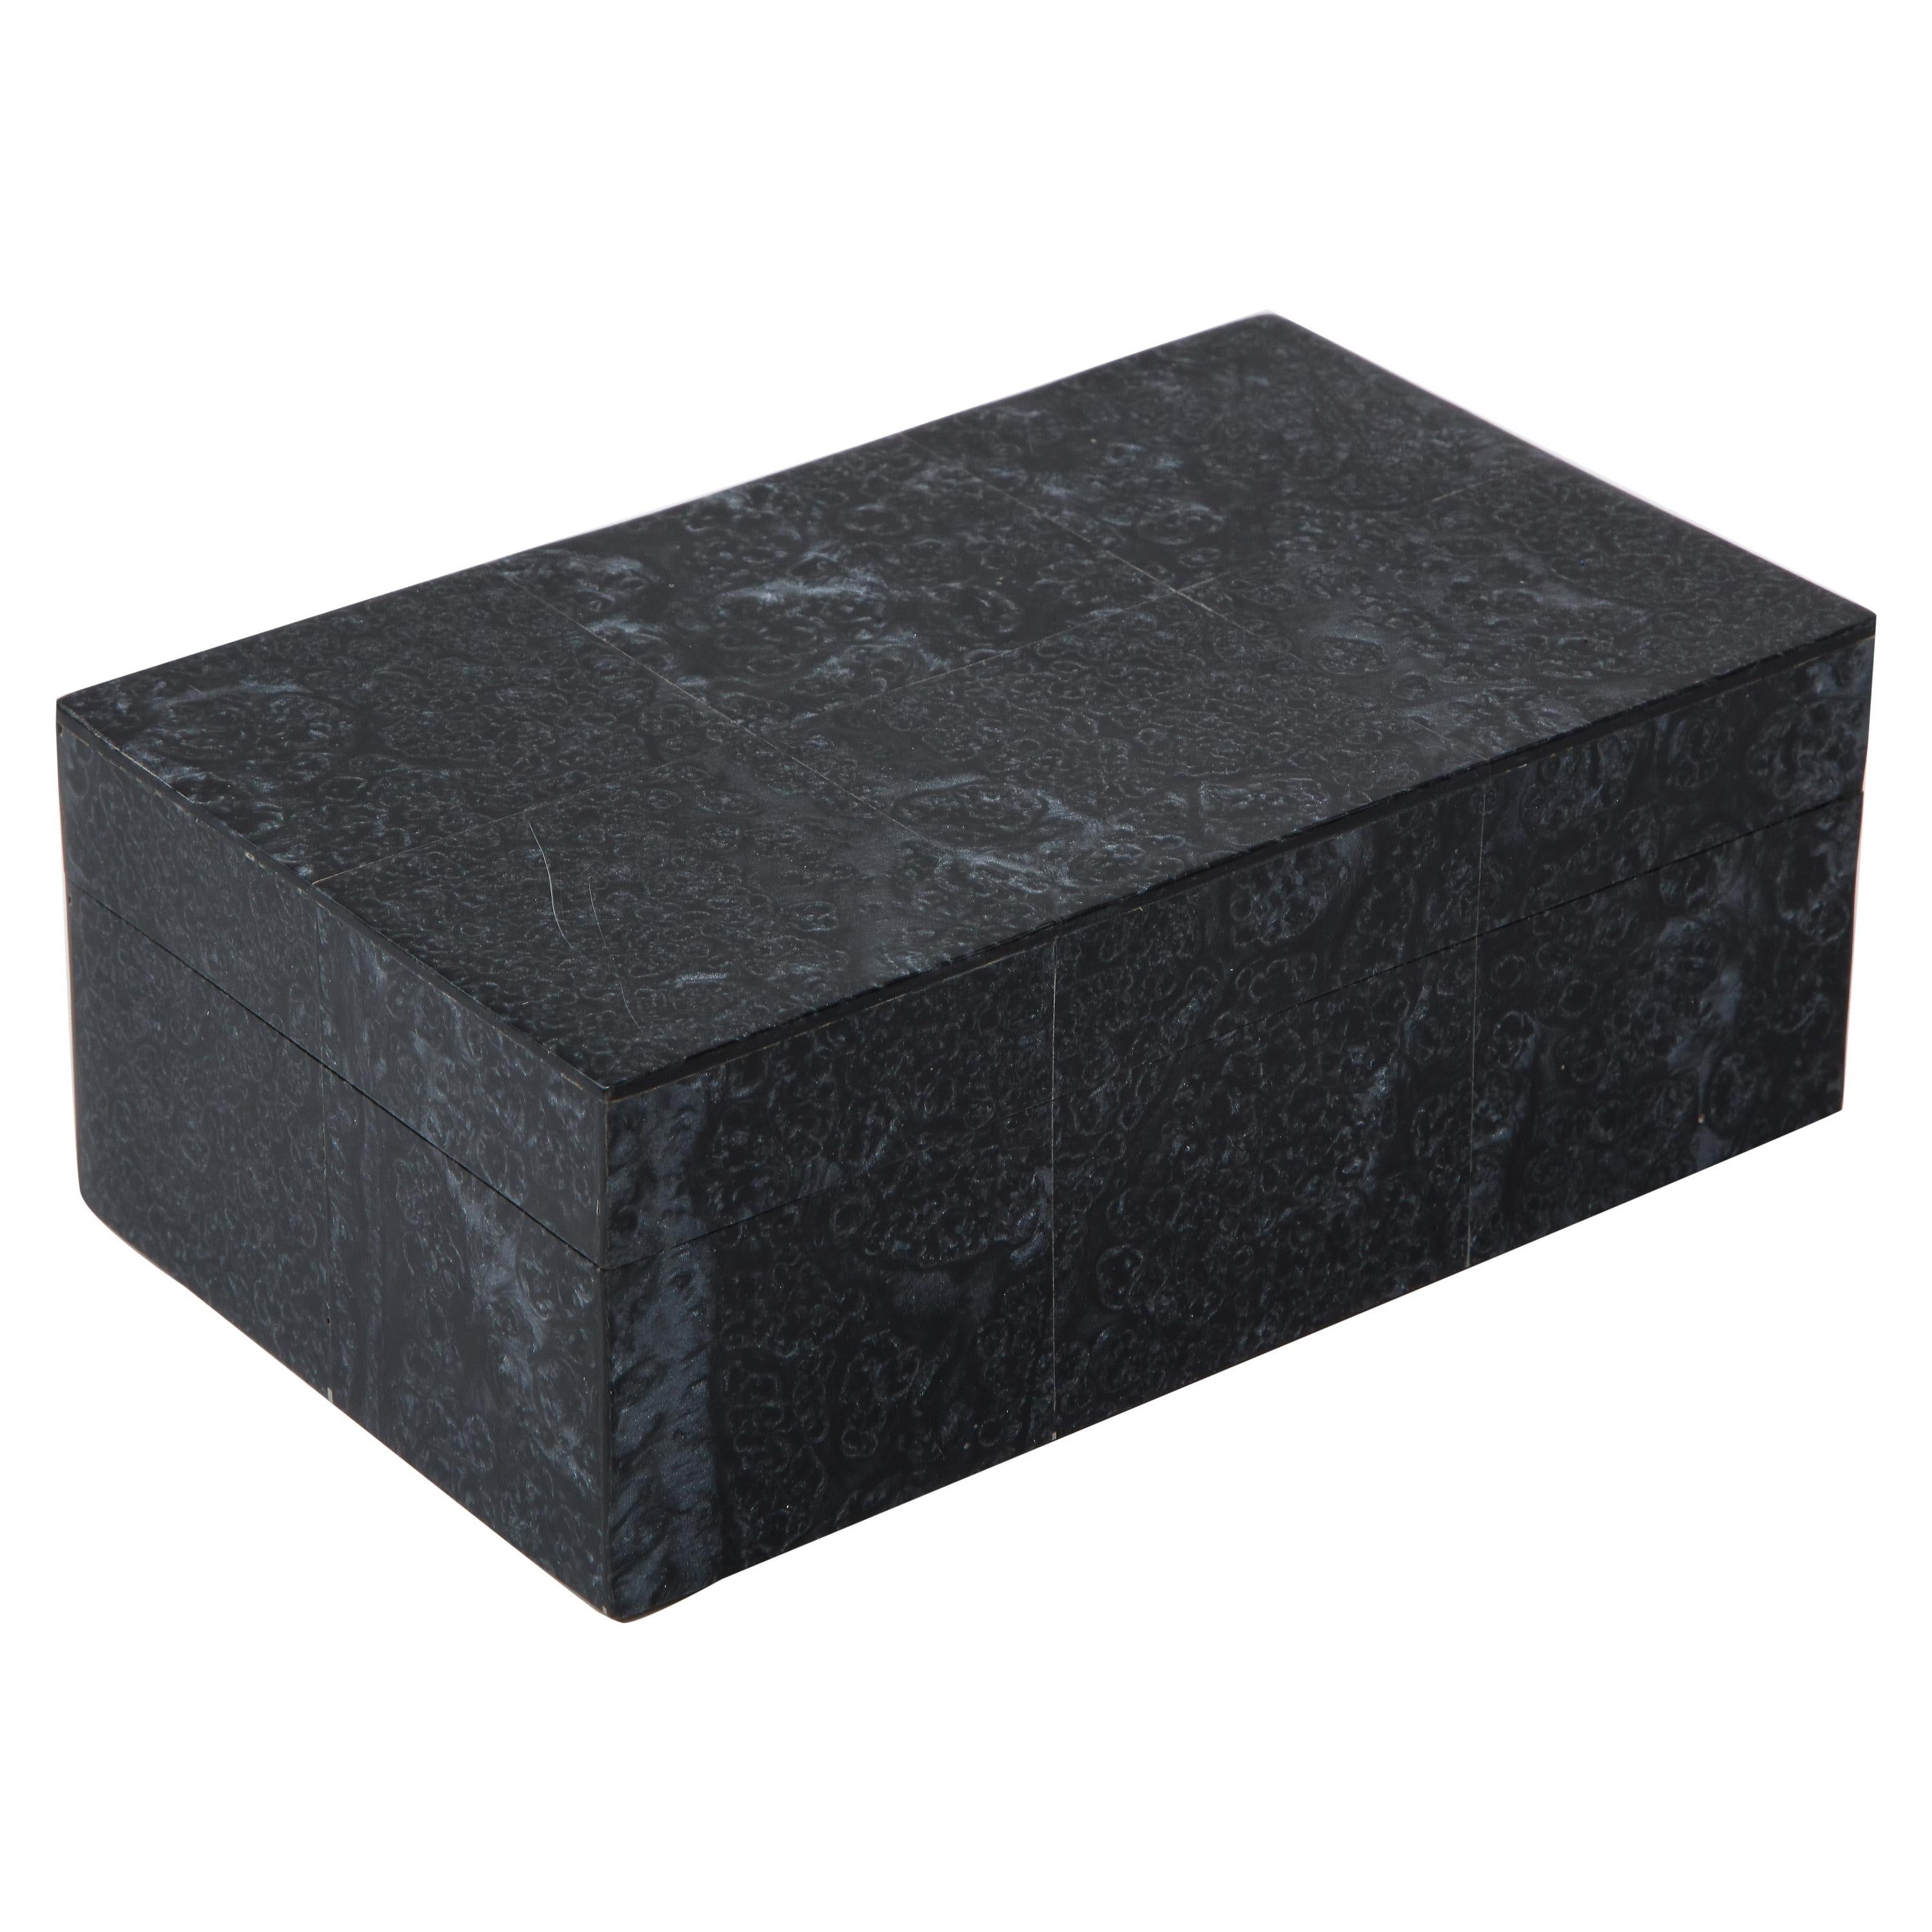 Obsidian Stone Clad Keepsake Box